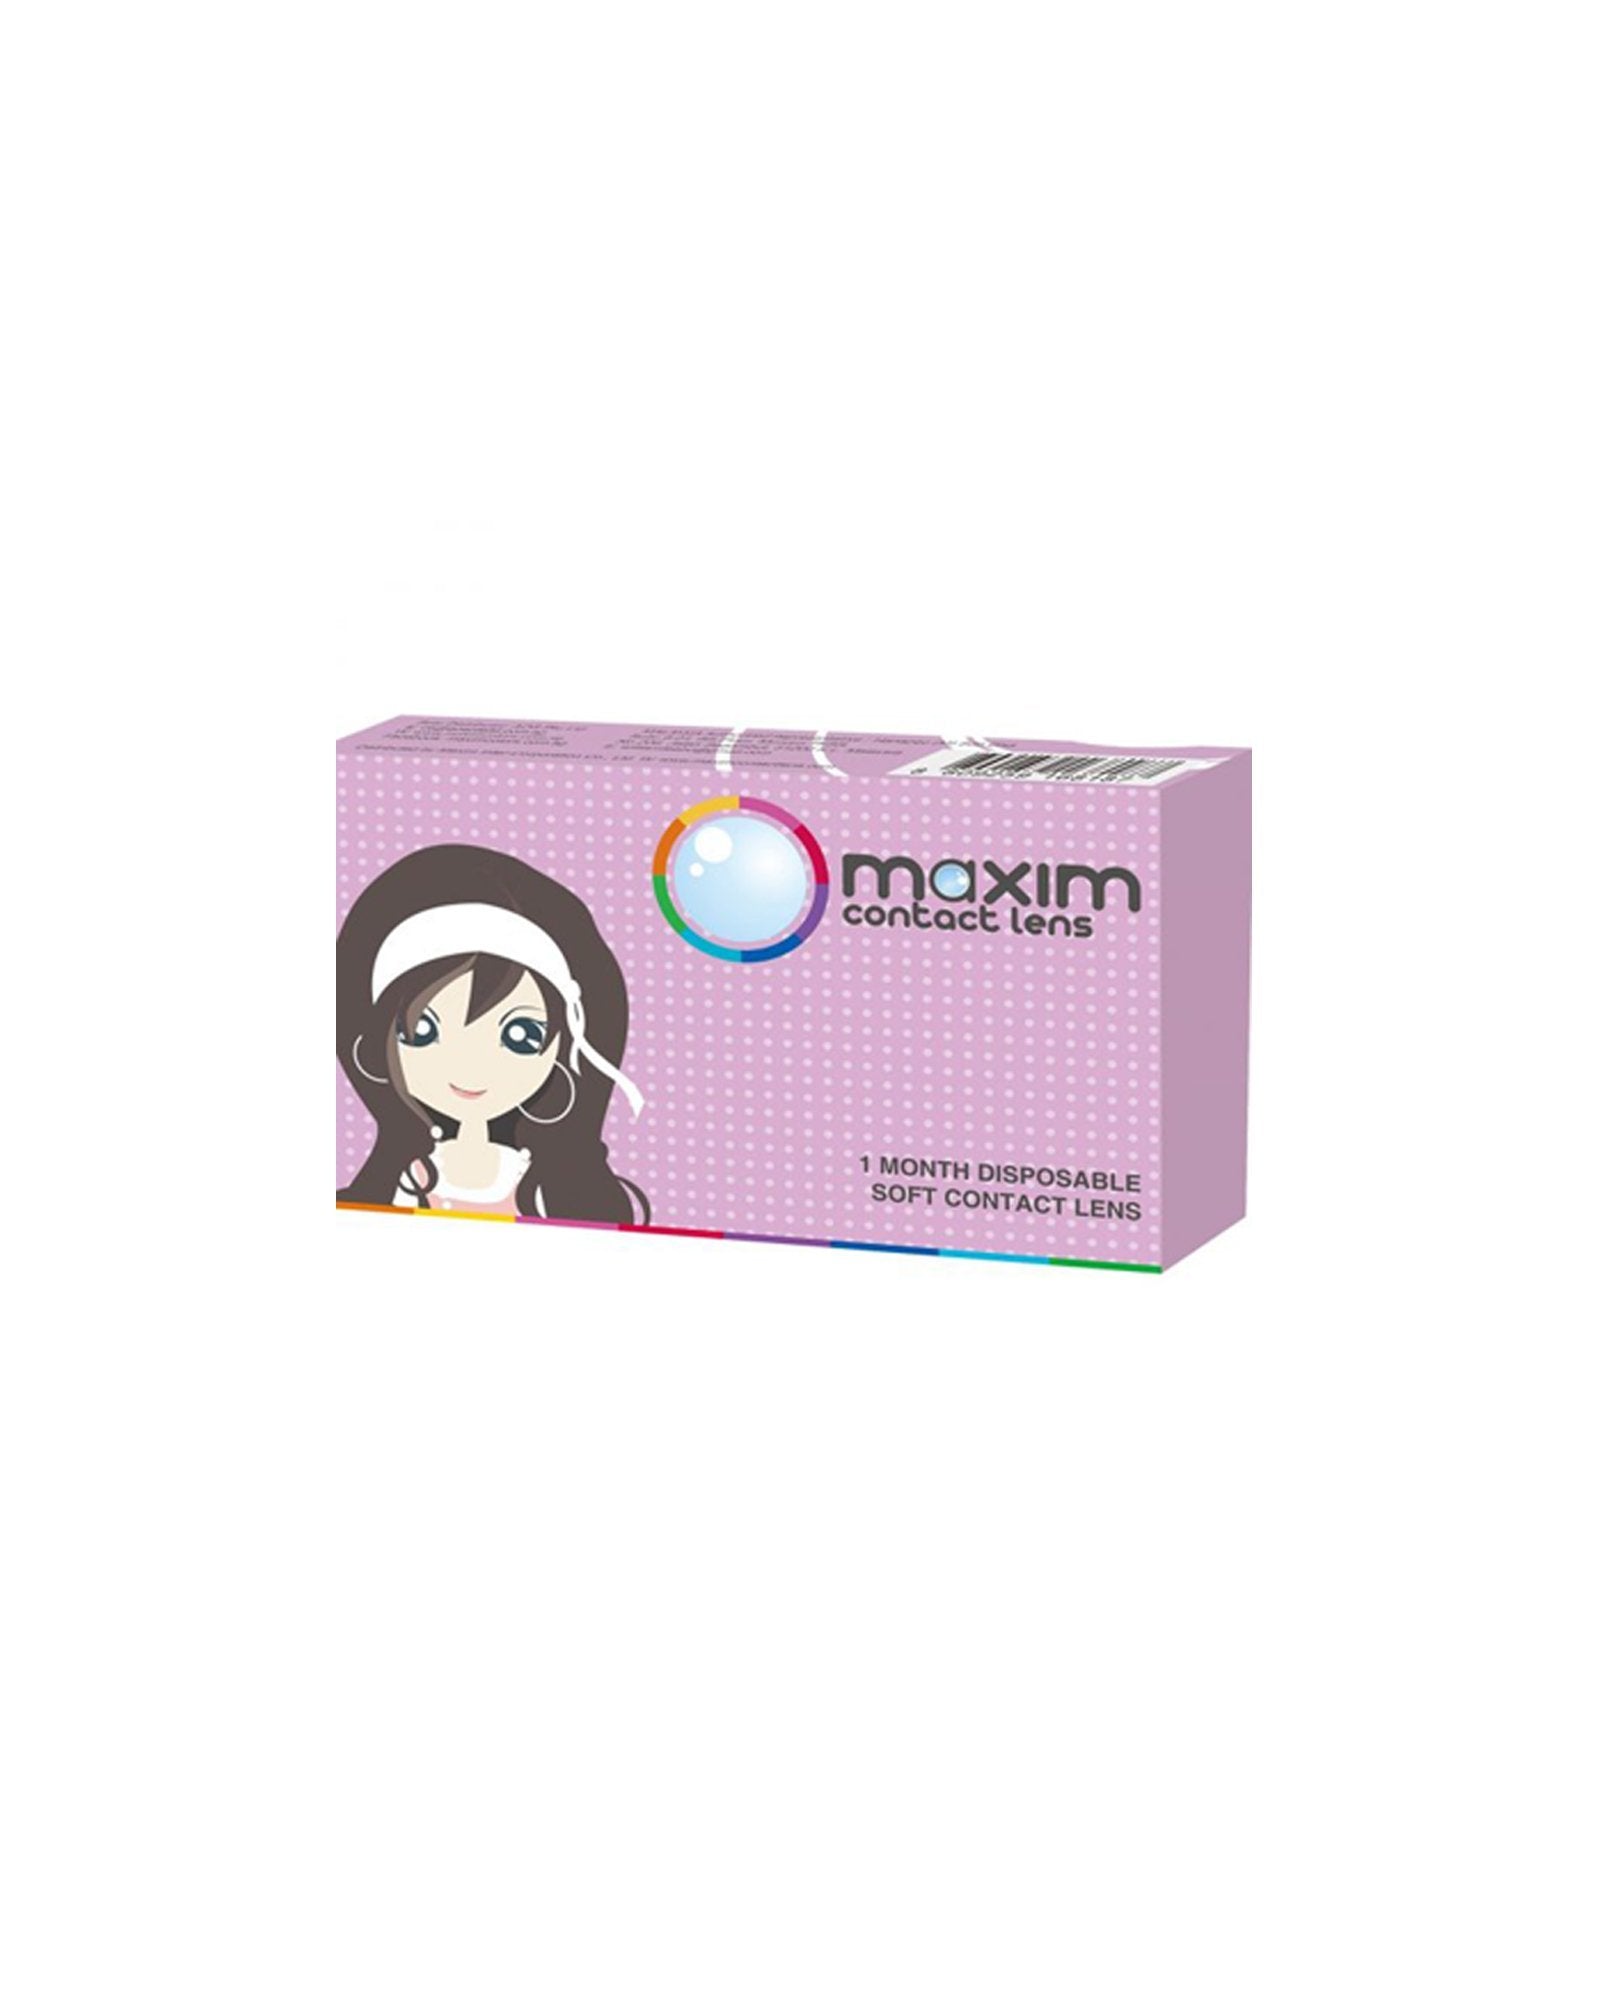 Maxim Big and Natural Eyes (Violet Box) x 2 boxes - Maxim - lenscottage